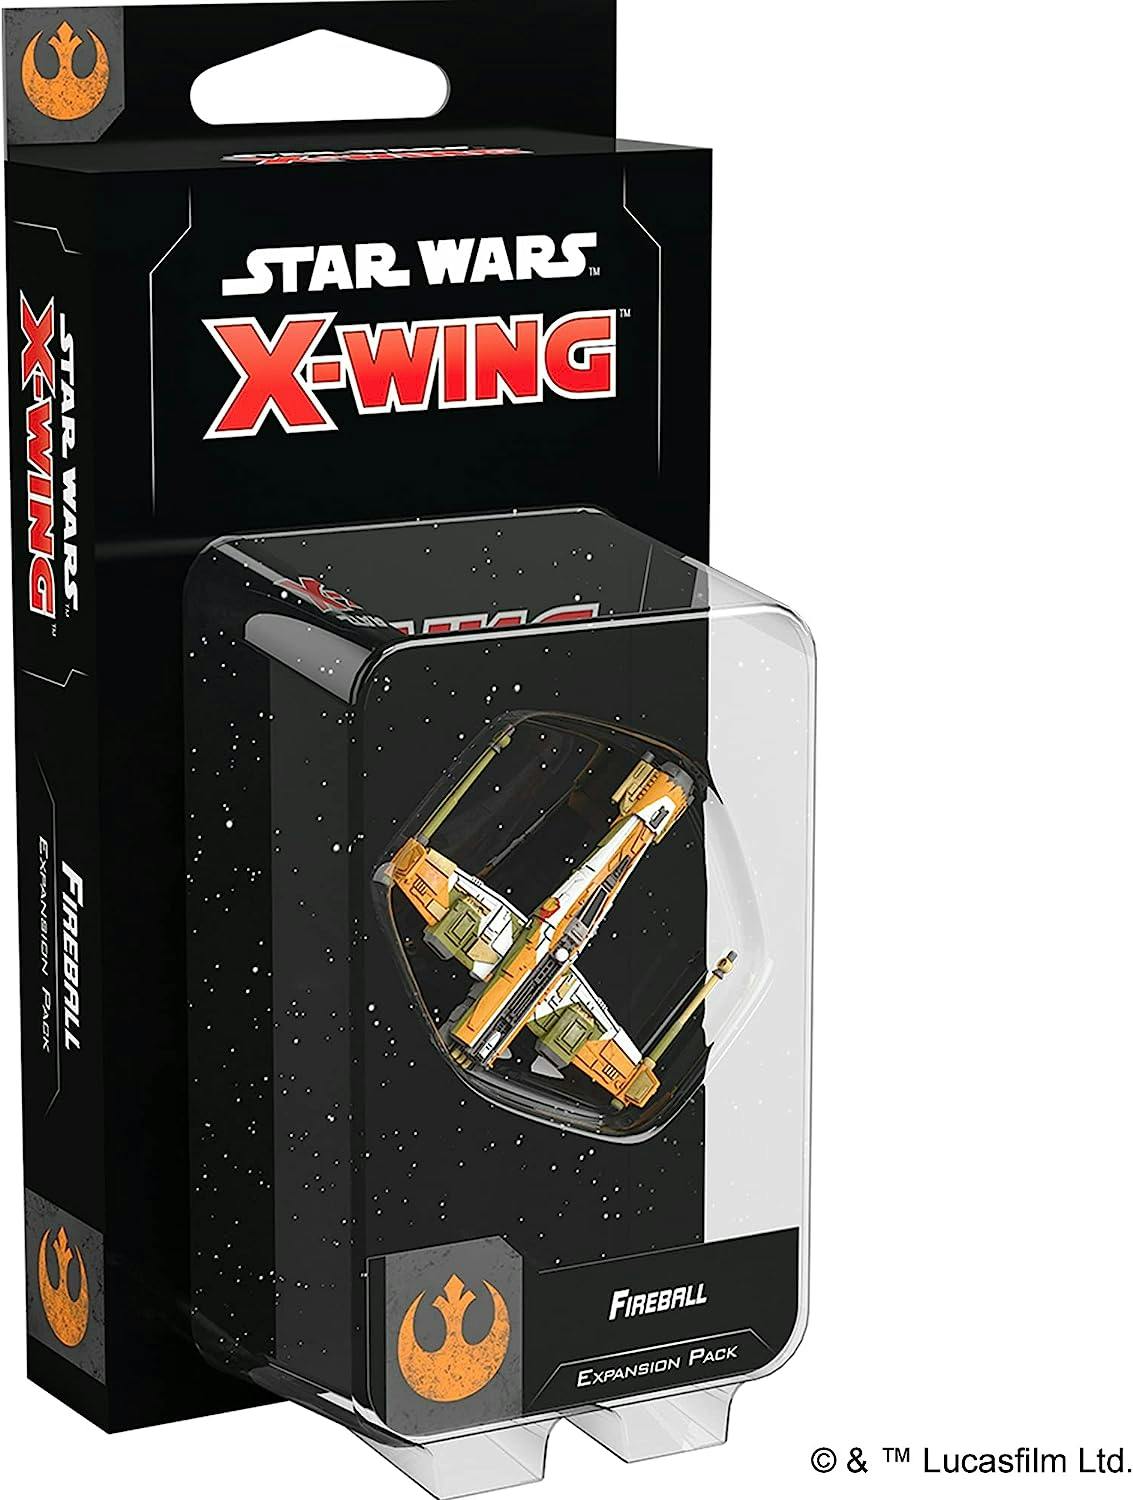 Star Wars X-Wing Miniatures Games: Fireball EXPANSION PACK - 71i0LNtus7L._AC_SL1500